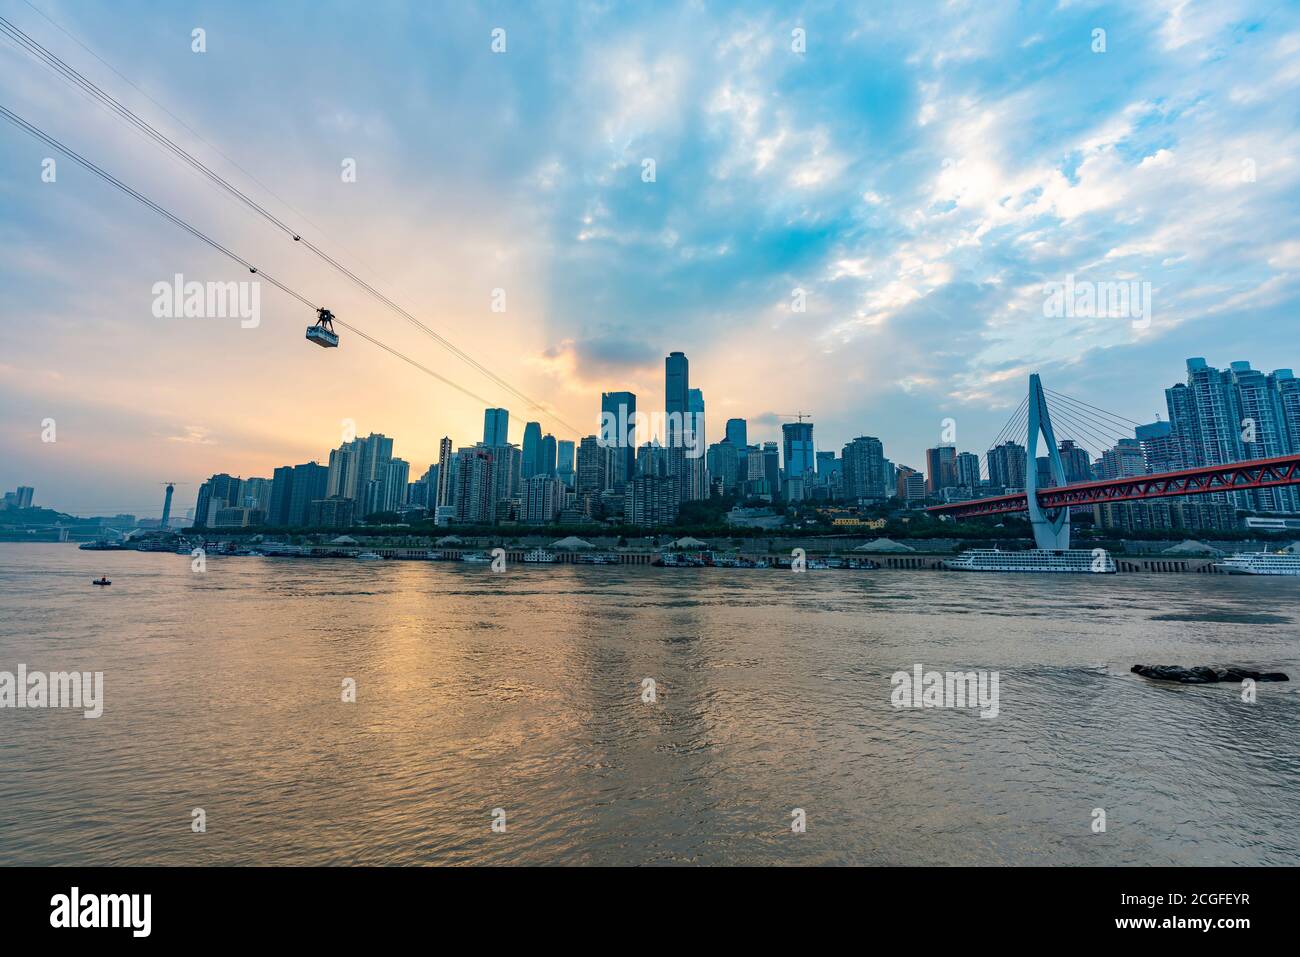 View of Chongqing city at sunset Stock Photo